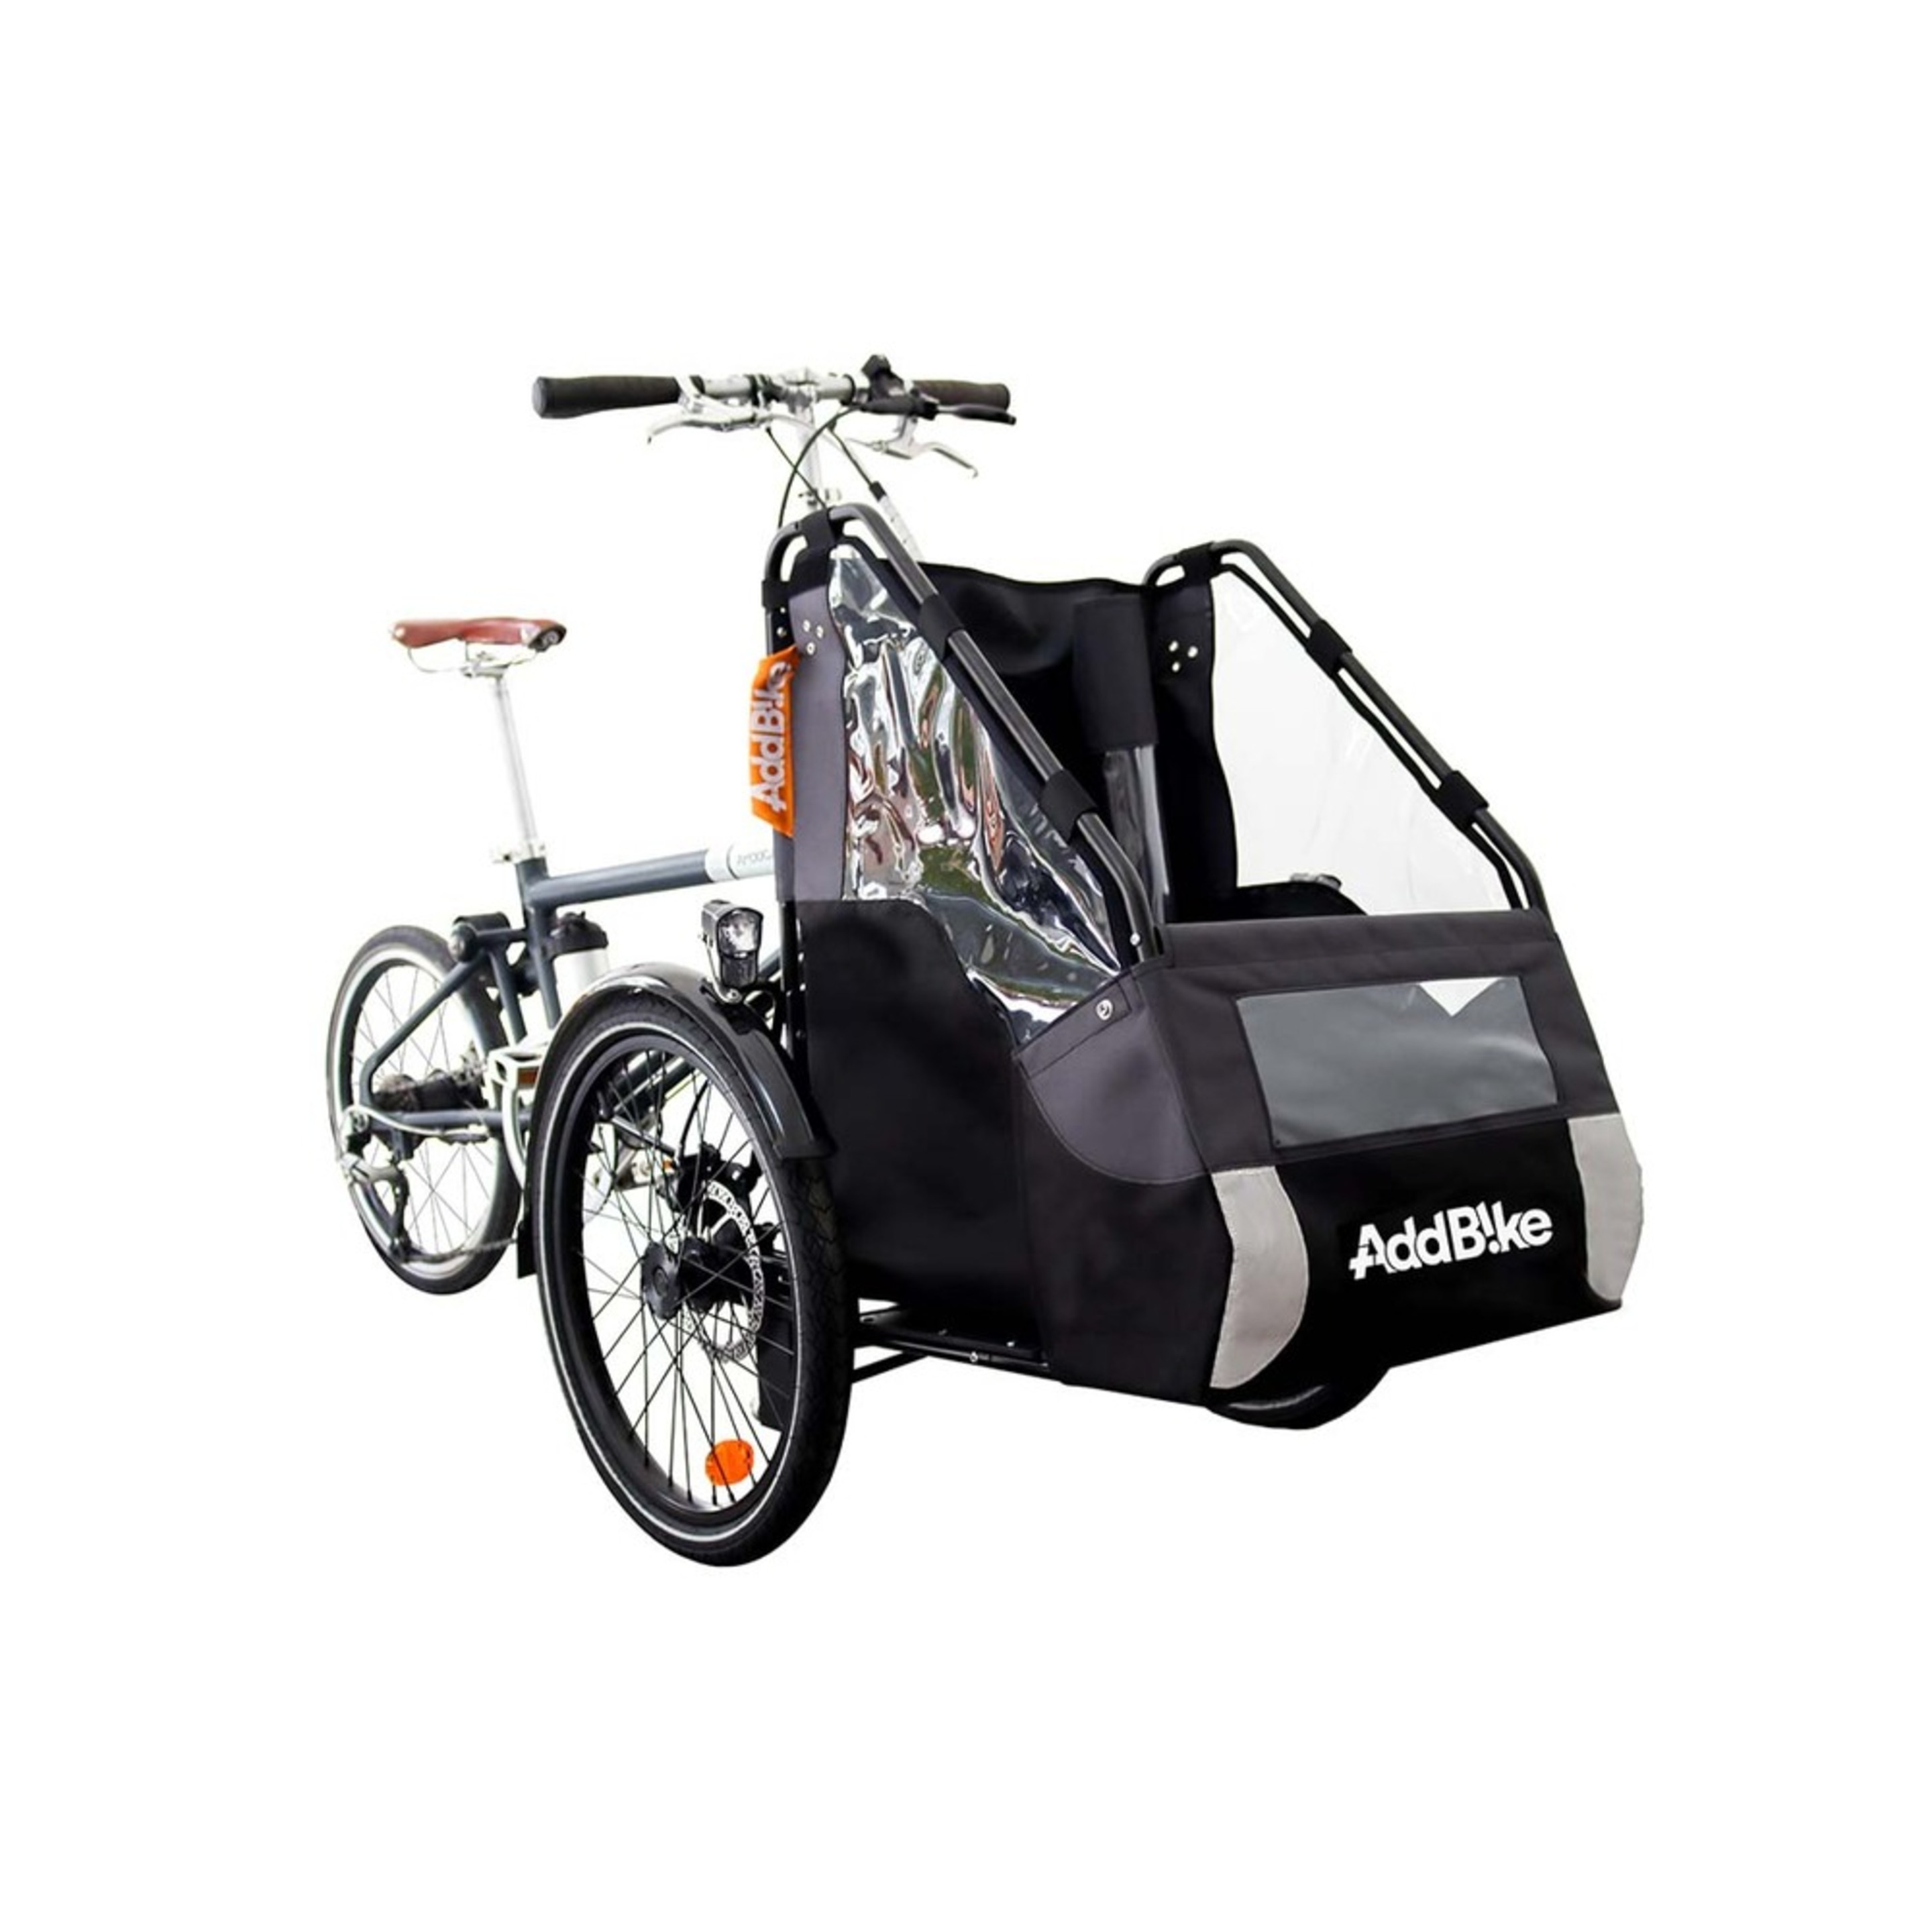 Kit Delantero Addbike Transporte Perro